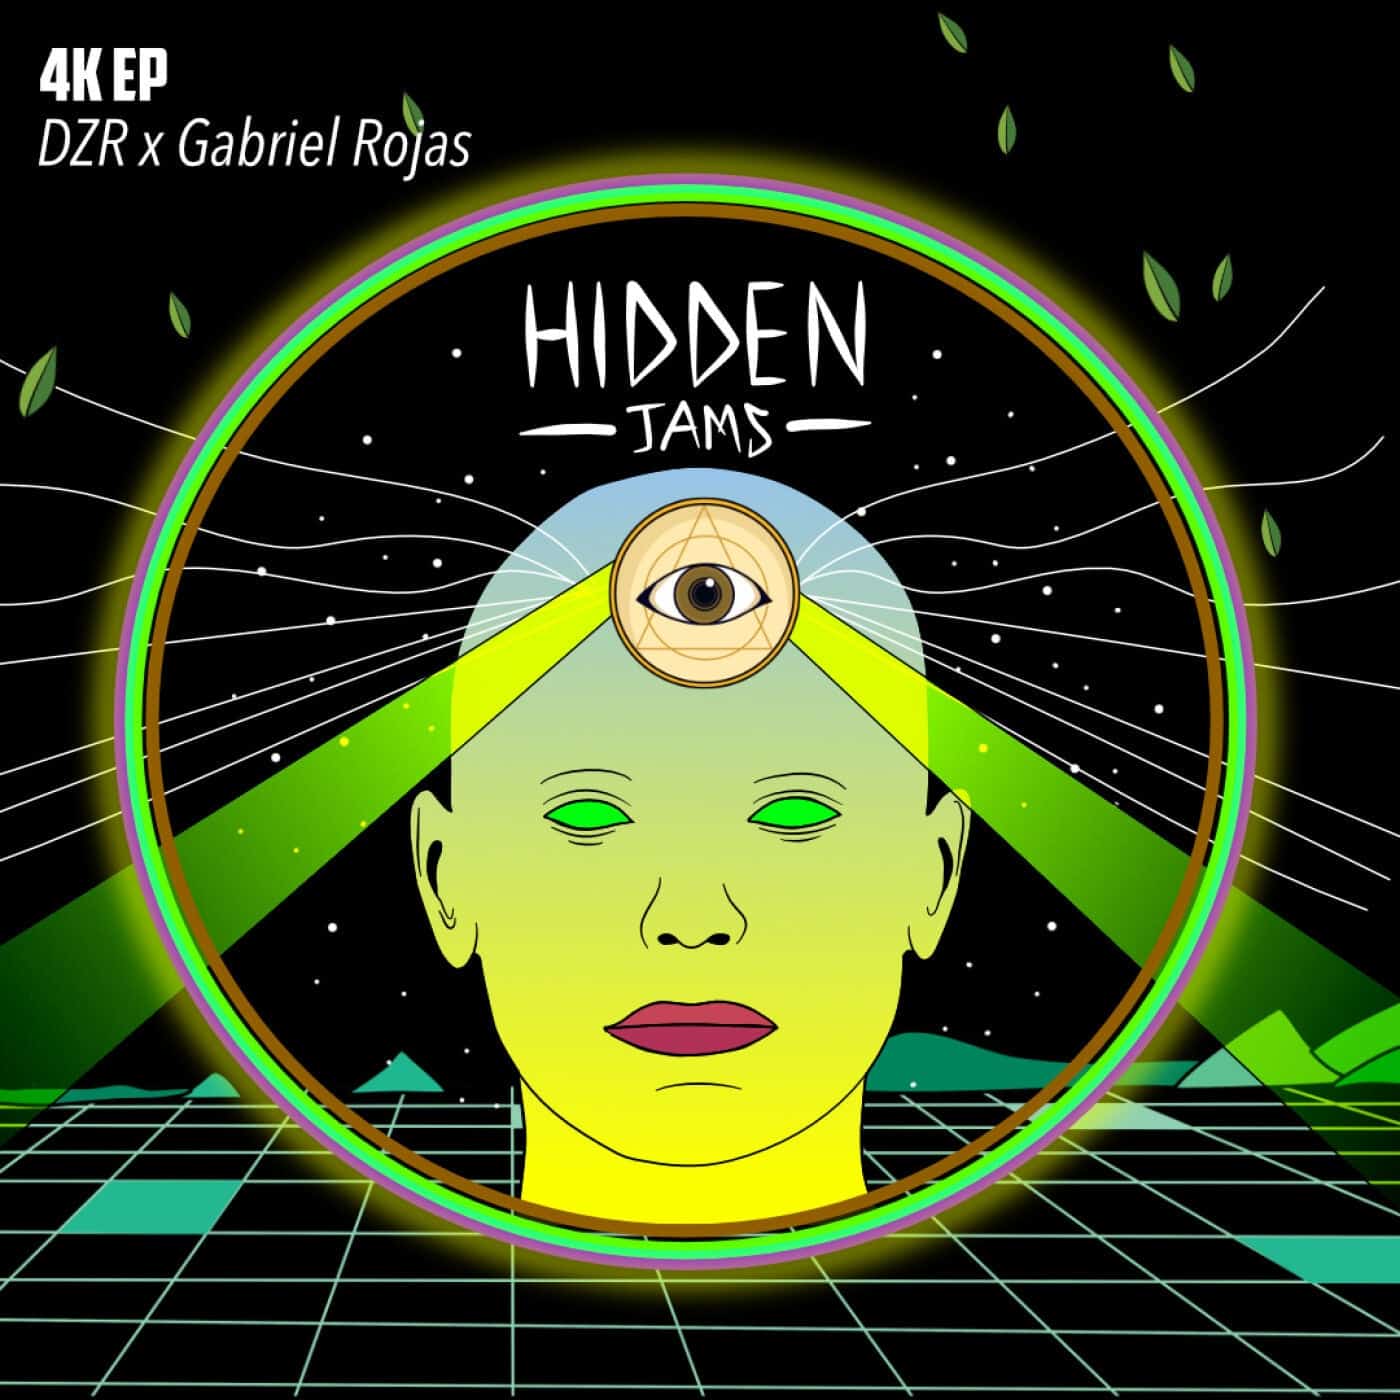 image cover: DZR, Gabriel Rojas - 4K EP on Hidden Jams